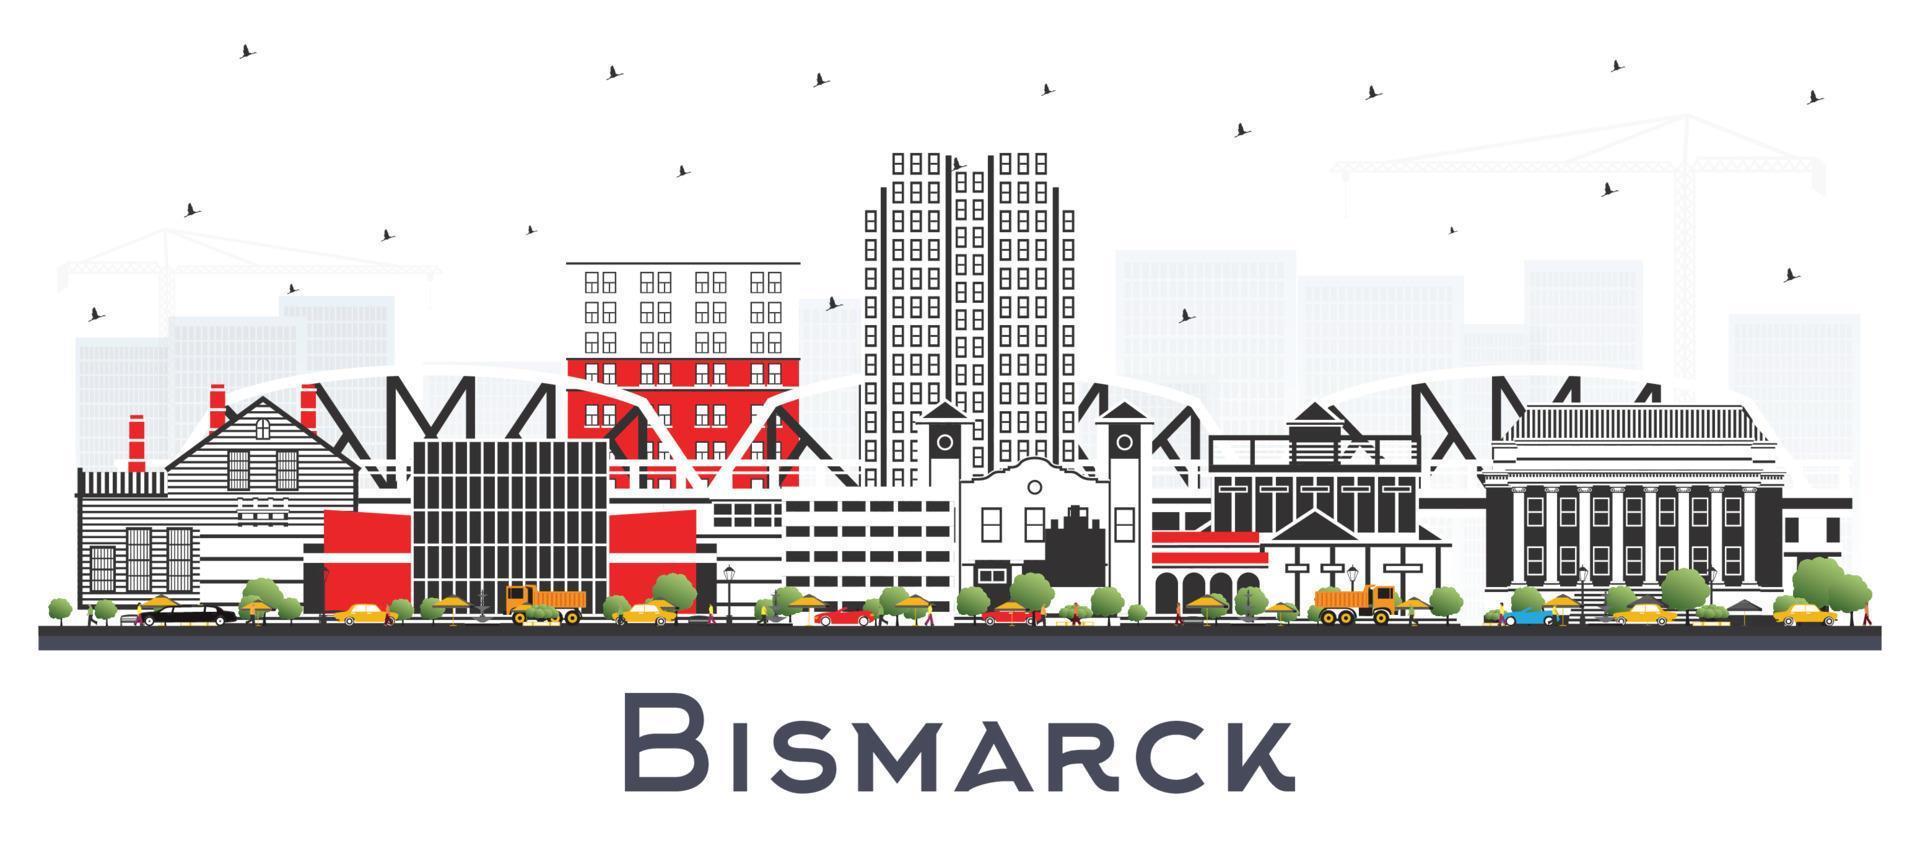 bismarck norr dakota stad horisont med Färg byggnader isolerat på vit. vektor